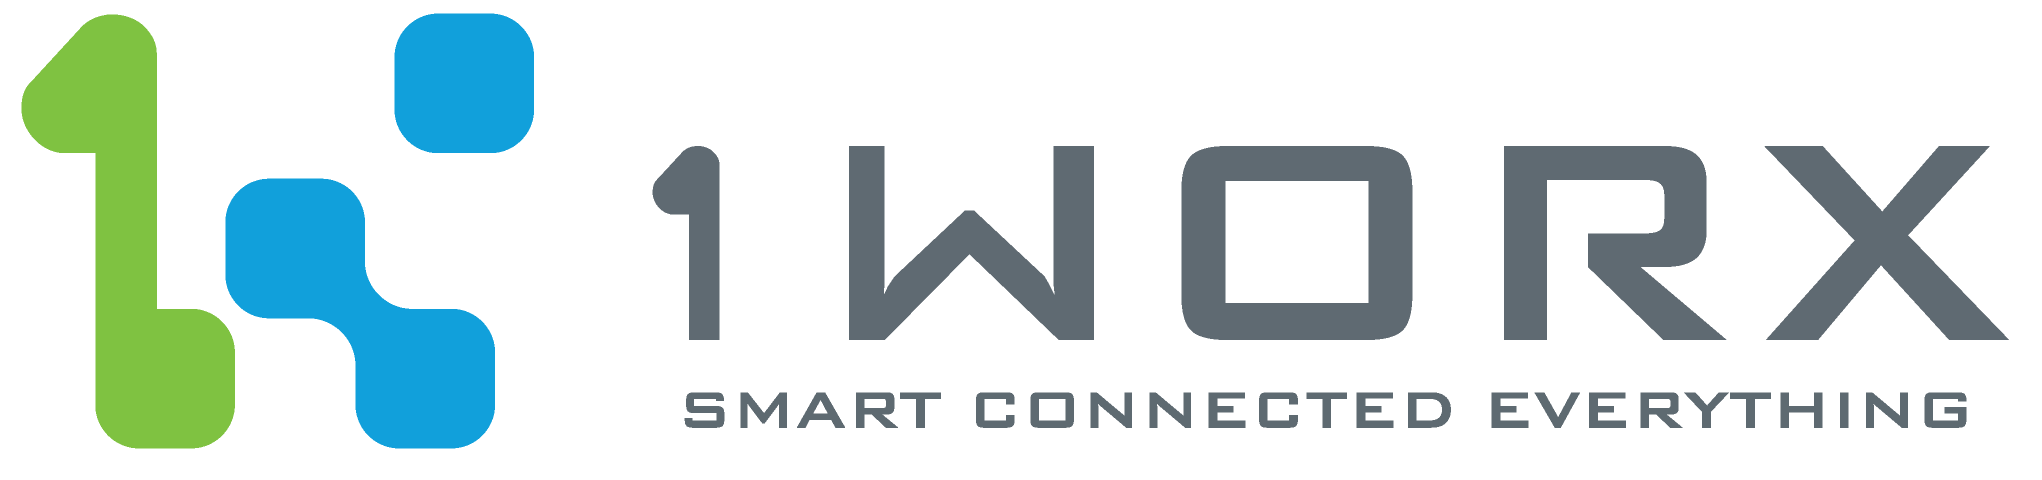 1worx logo